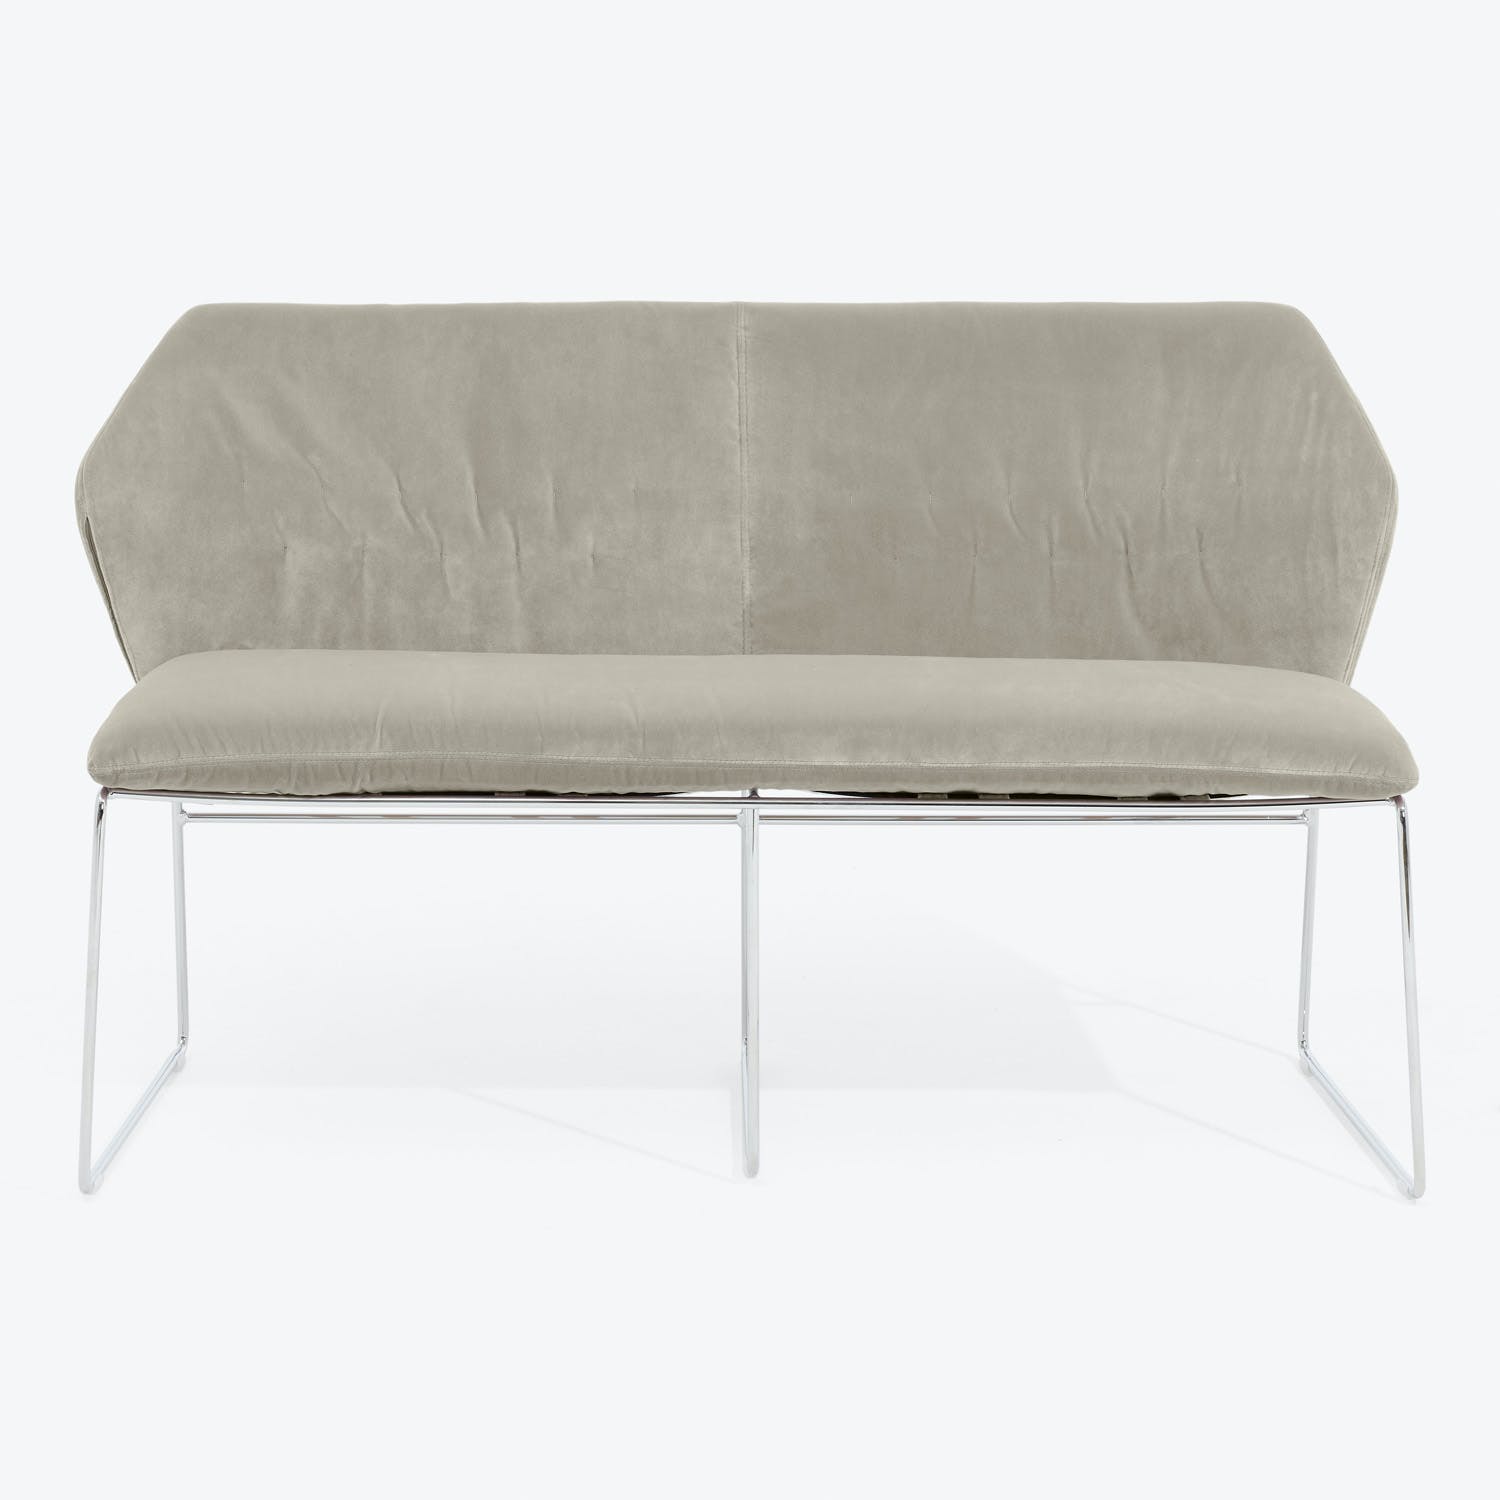 Modern-style minimalist sofa with sleek metallic frame and seamless design.